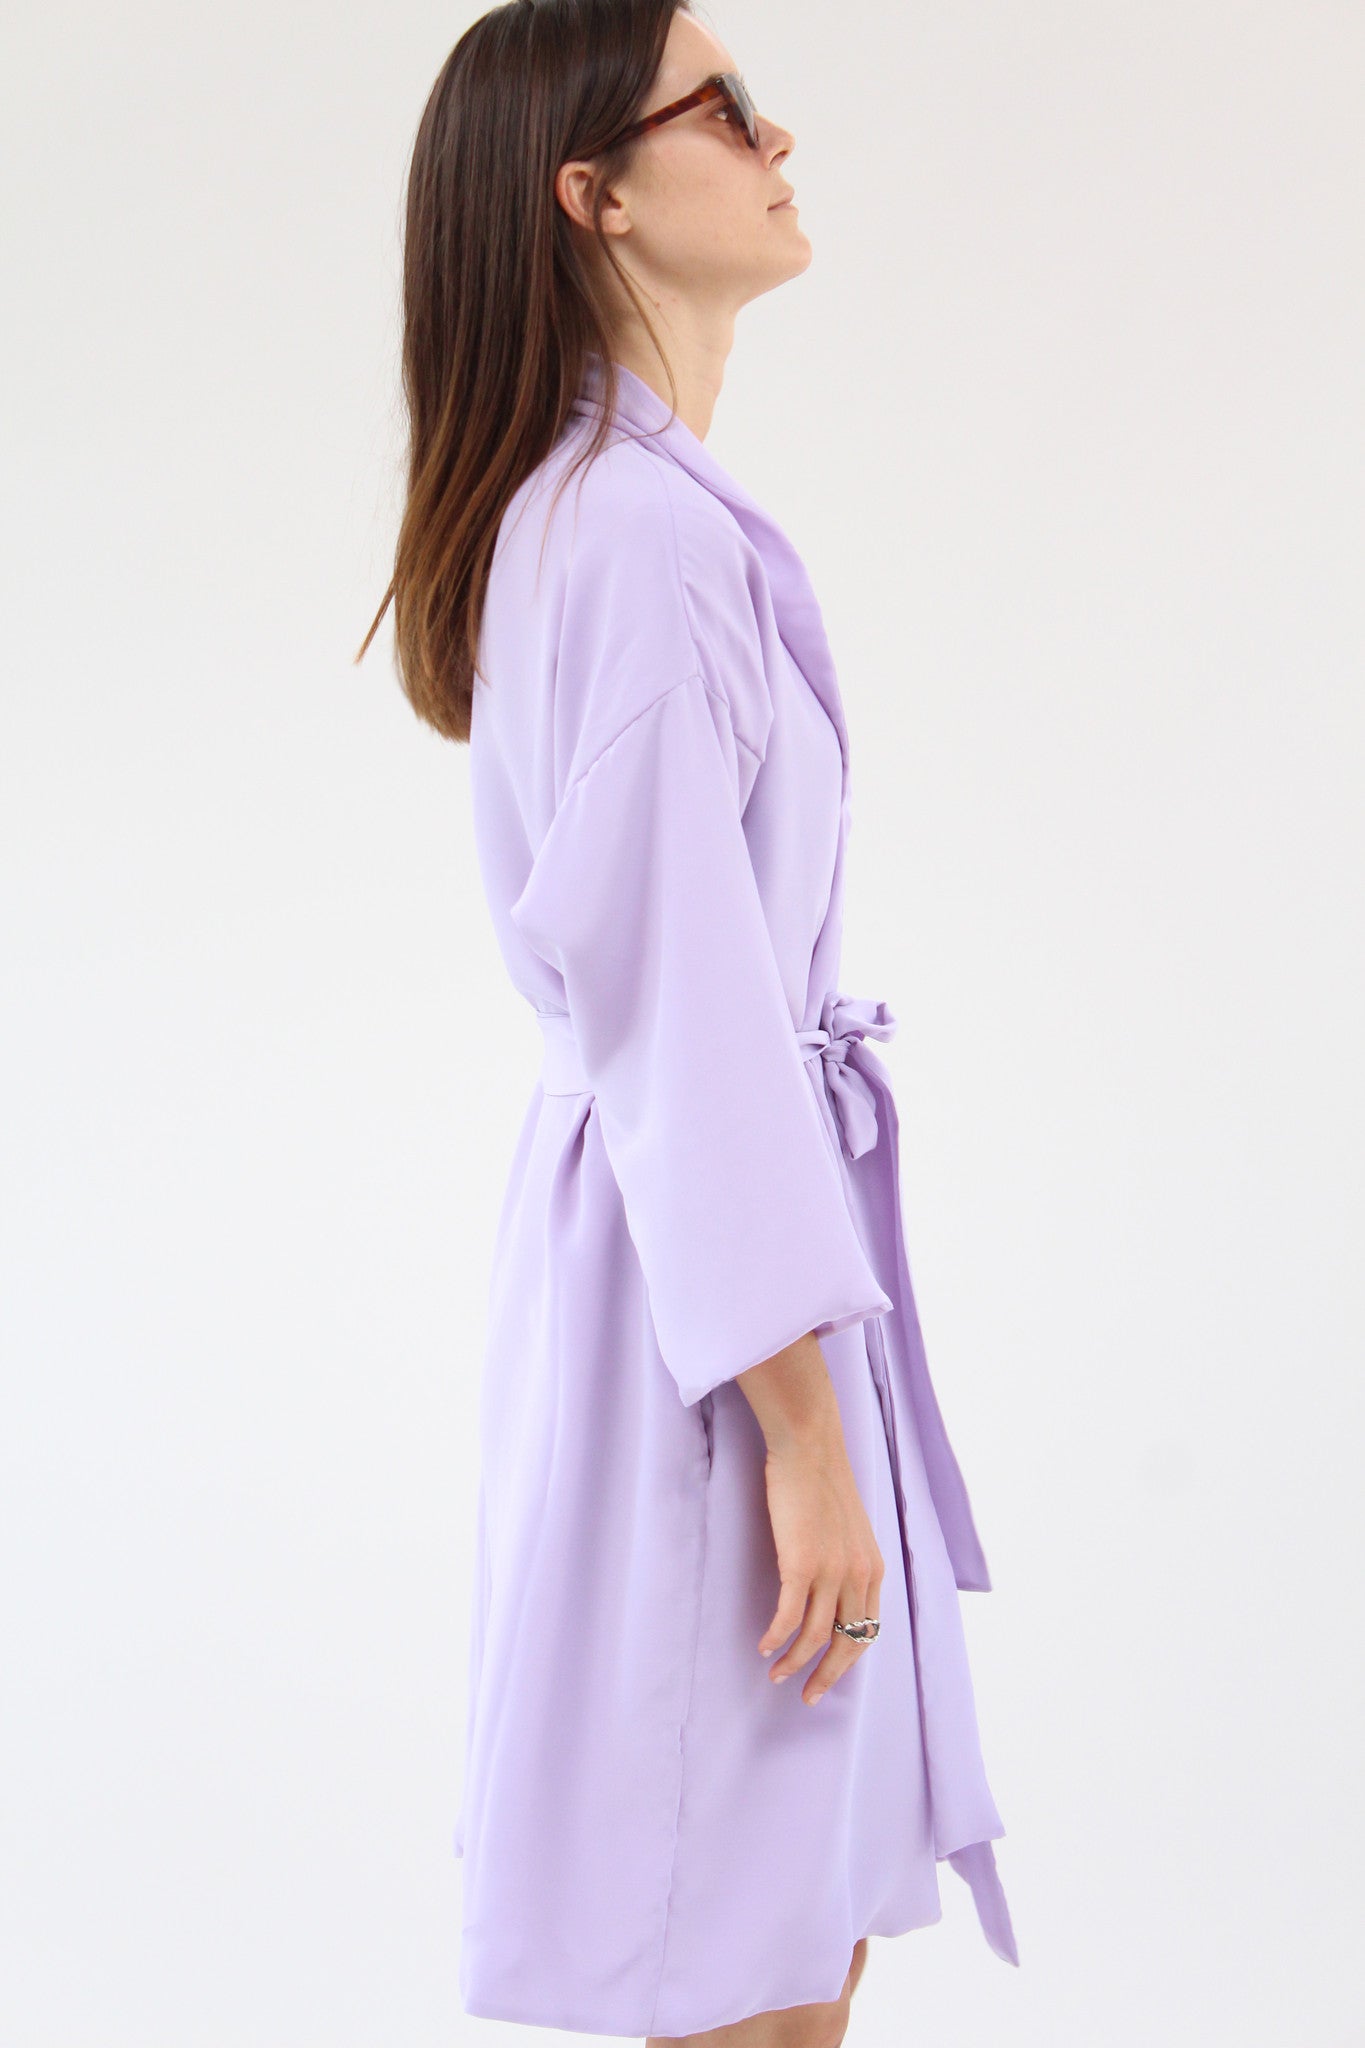 Lina Rennell Silk Robe Lilac / Beklina